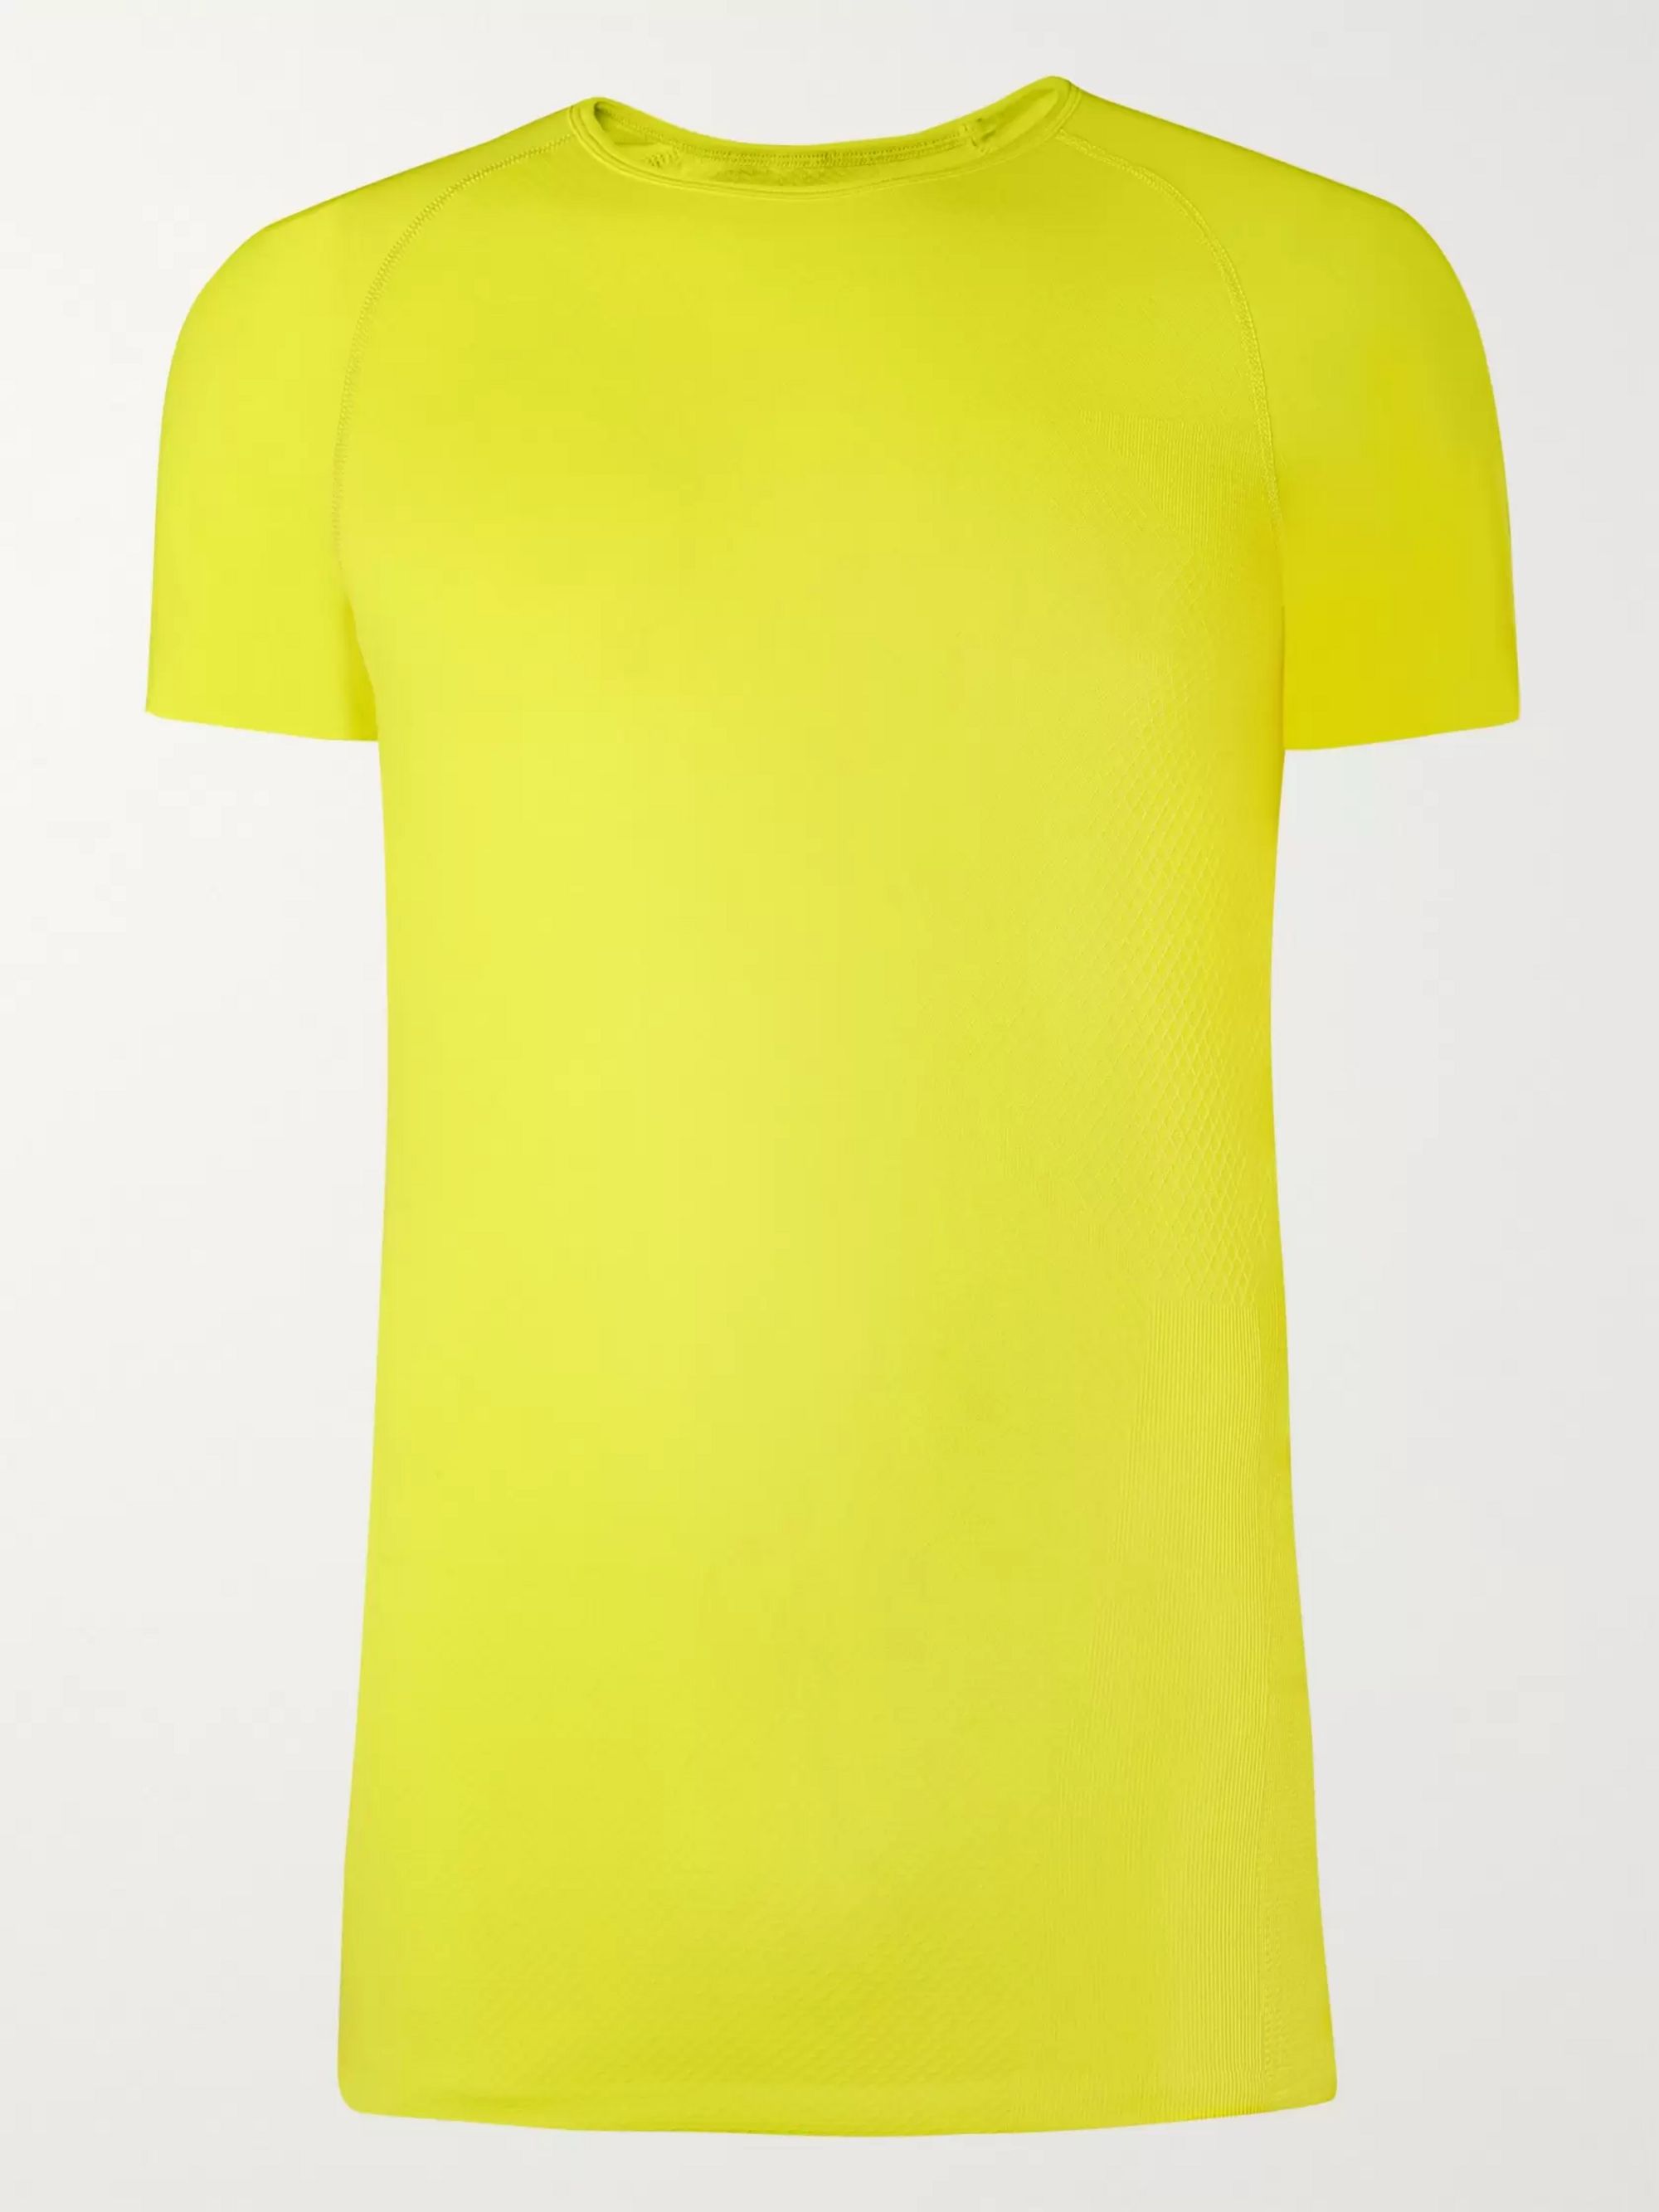 yellow jersey shirt